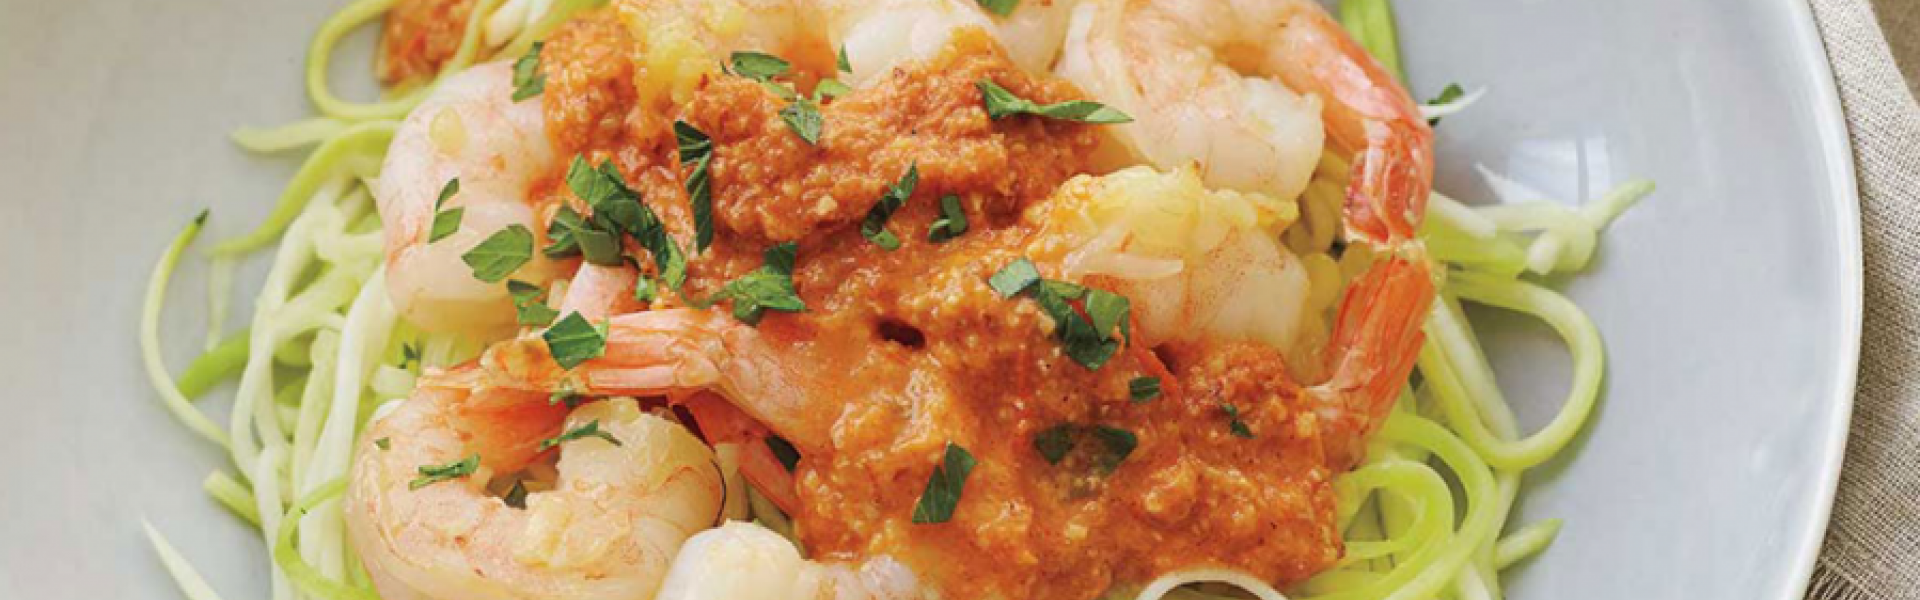 Romesco-Garlic-Shrimp-with-Zucchini-Noodles-Banner